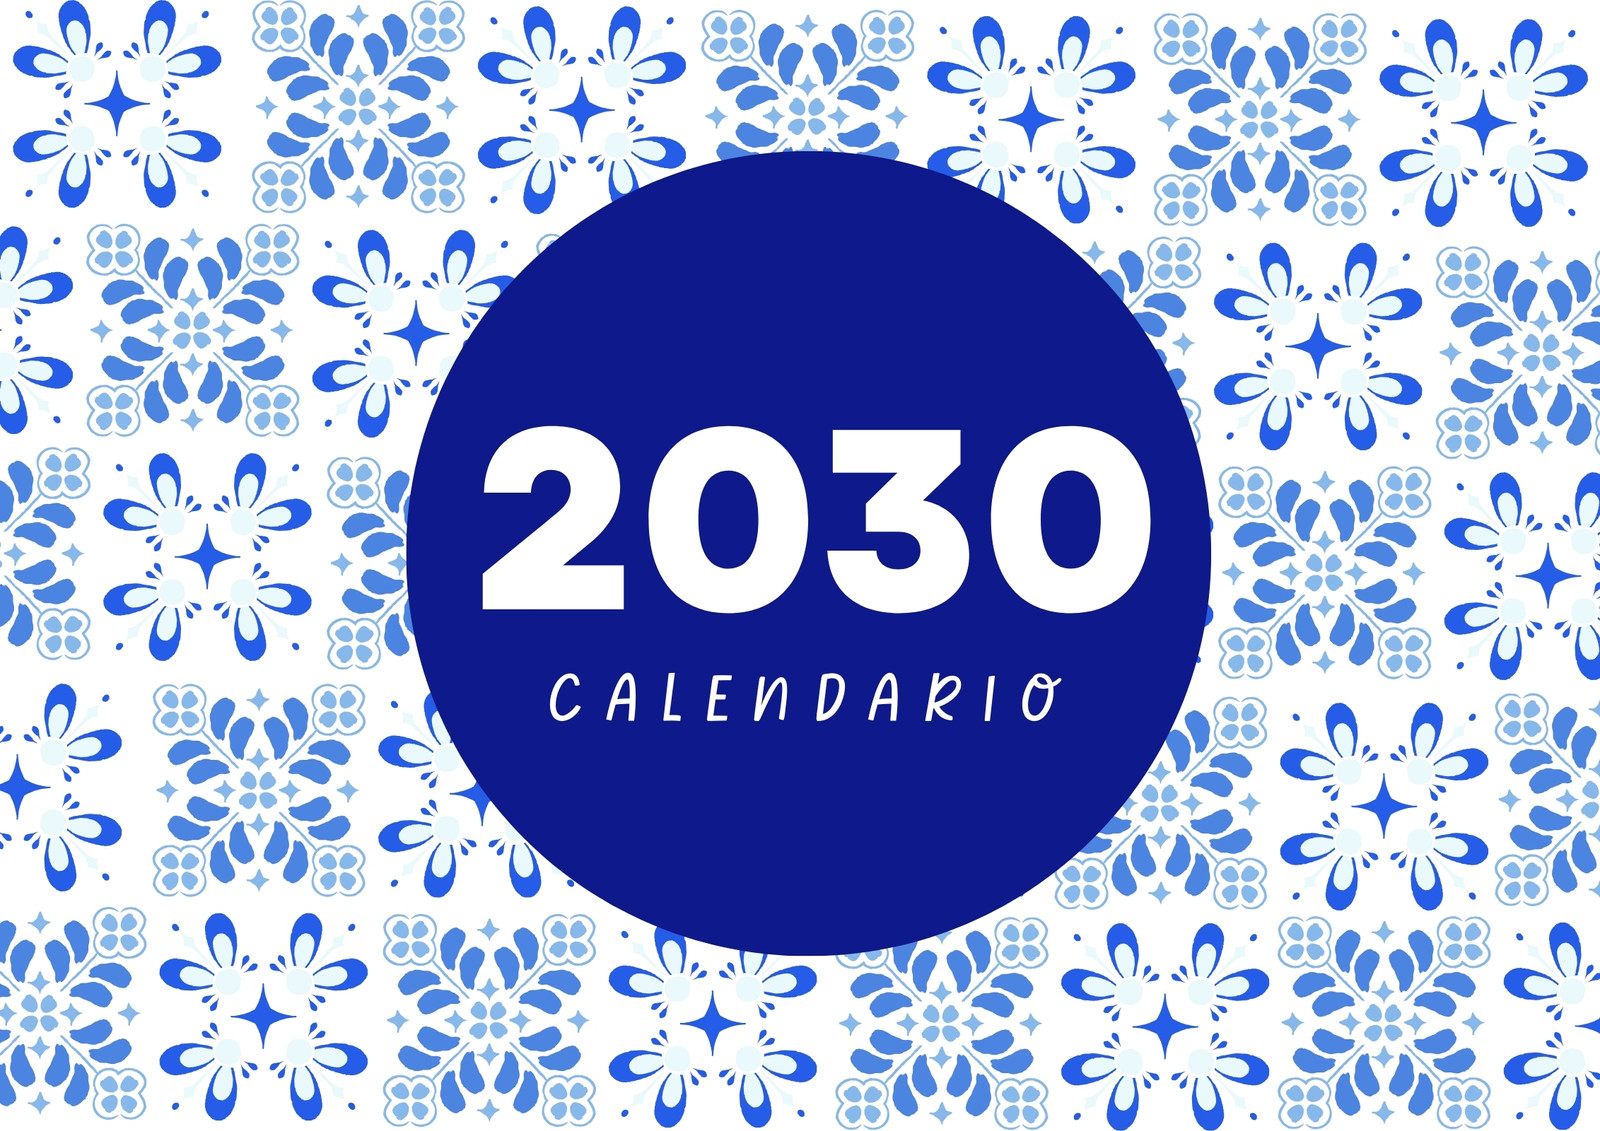 Calendario para pared horizontal patrones florales ilustrados colores azules